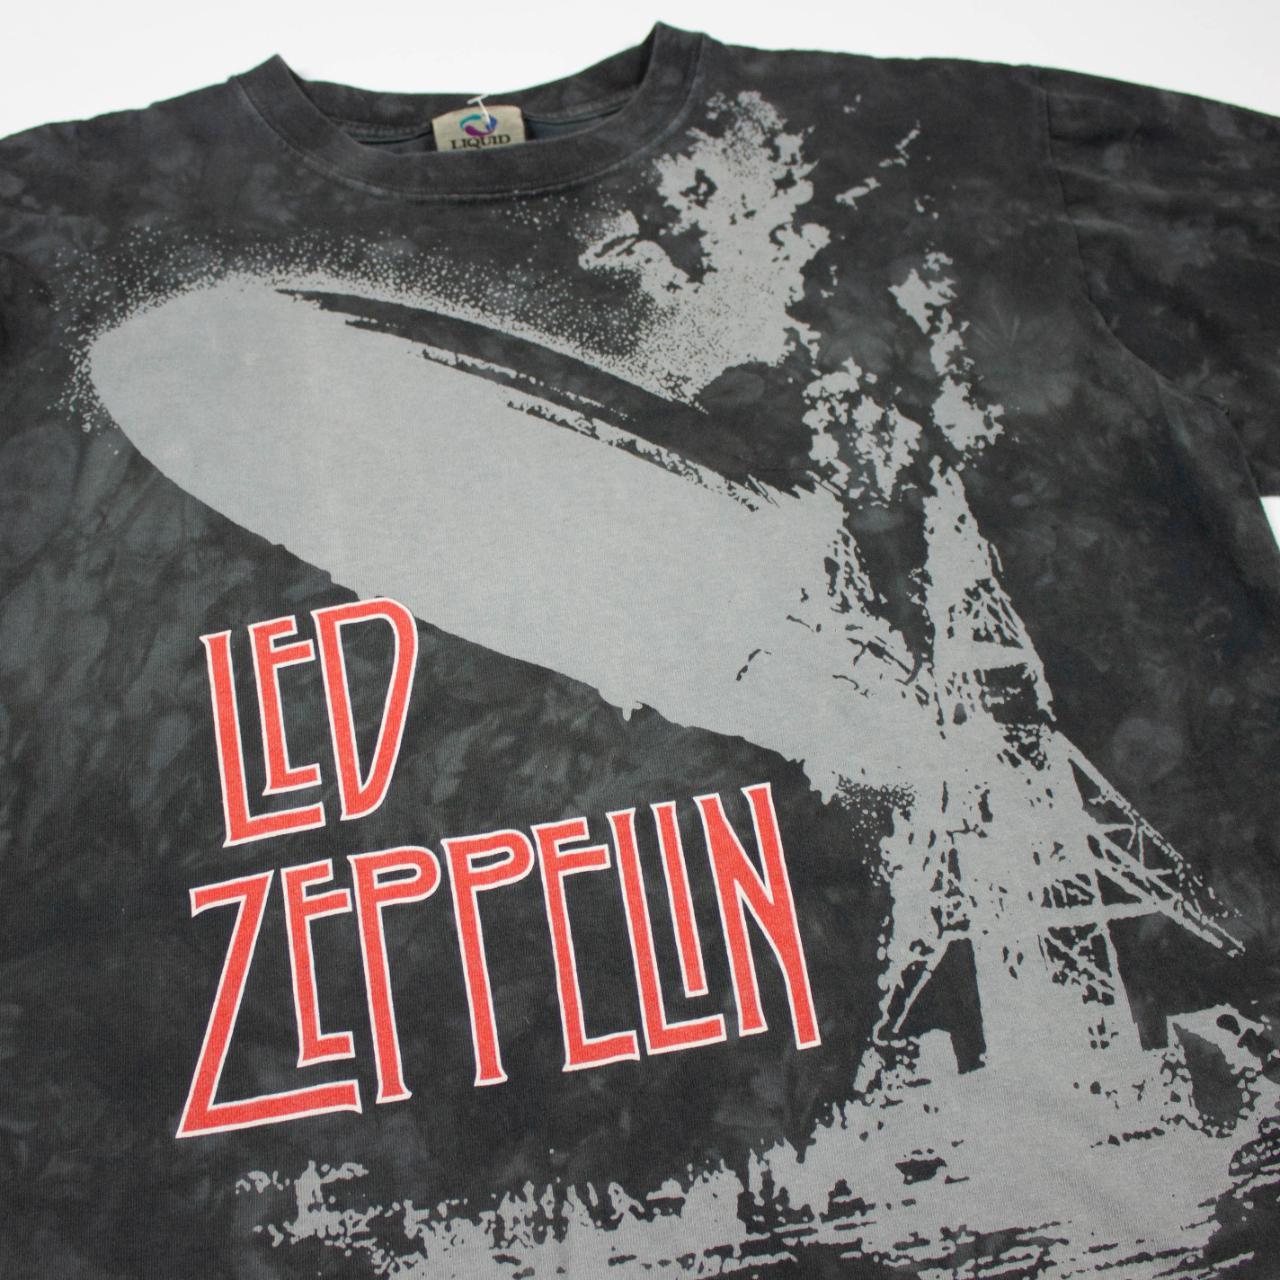 Product Image 2 - Vintage Led Zeppelin t shirt

Grey